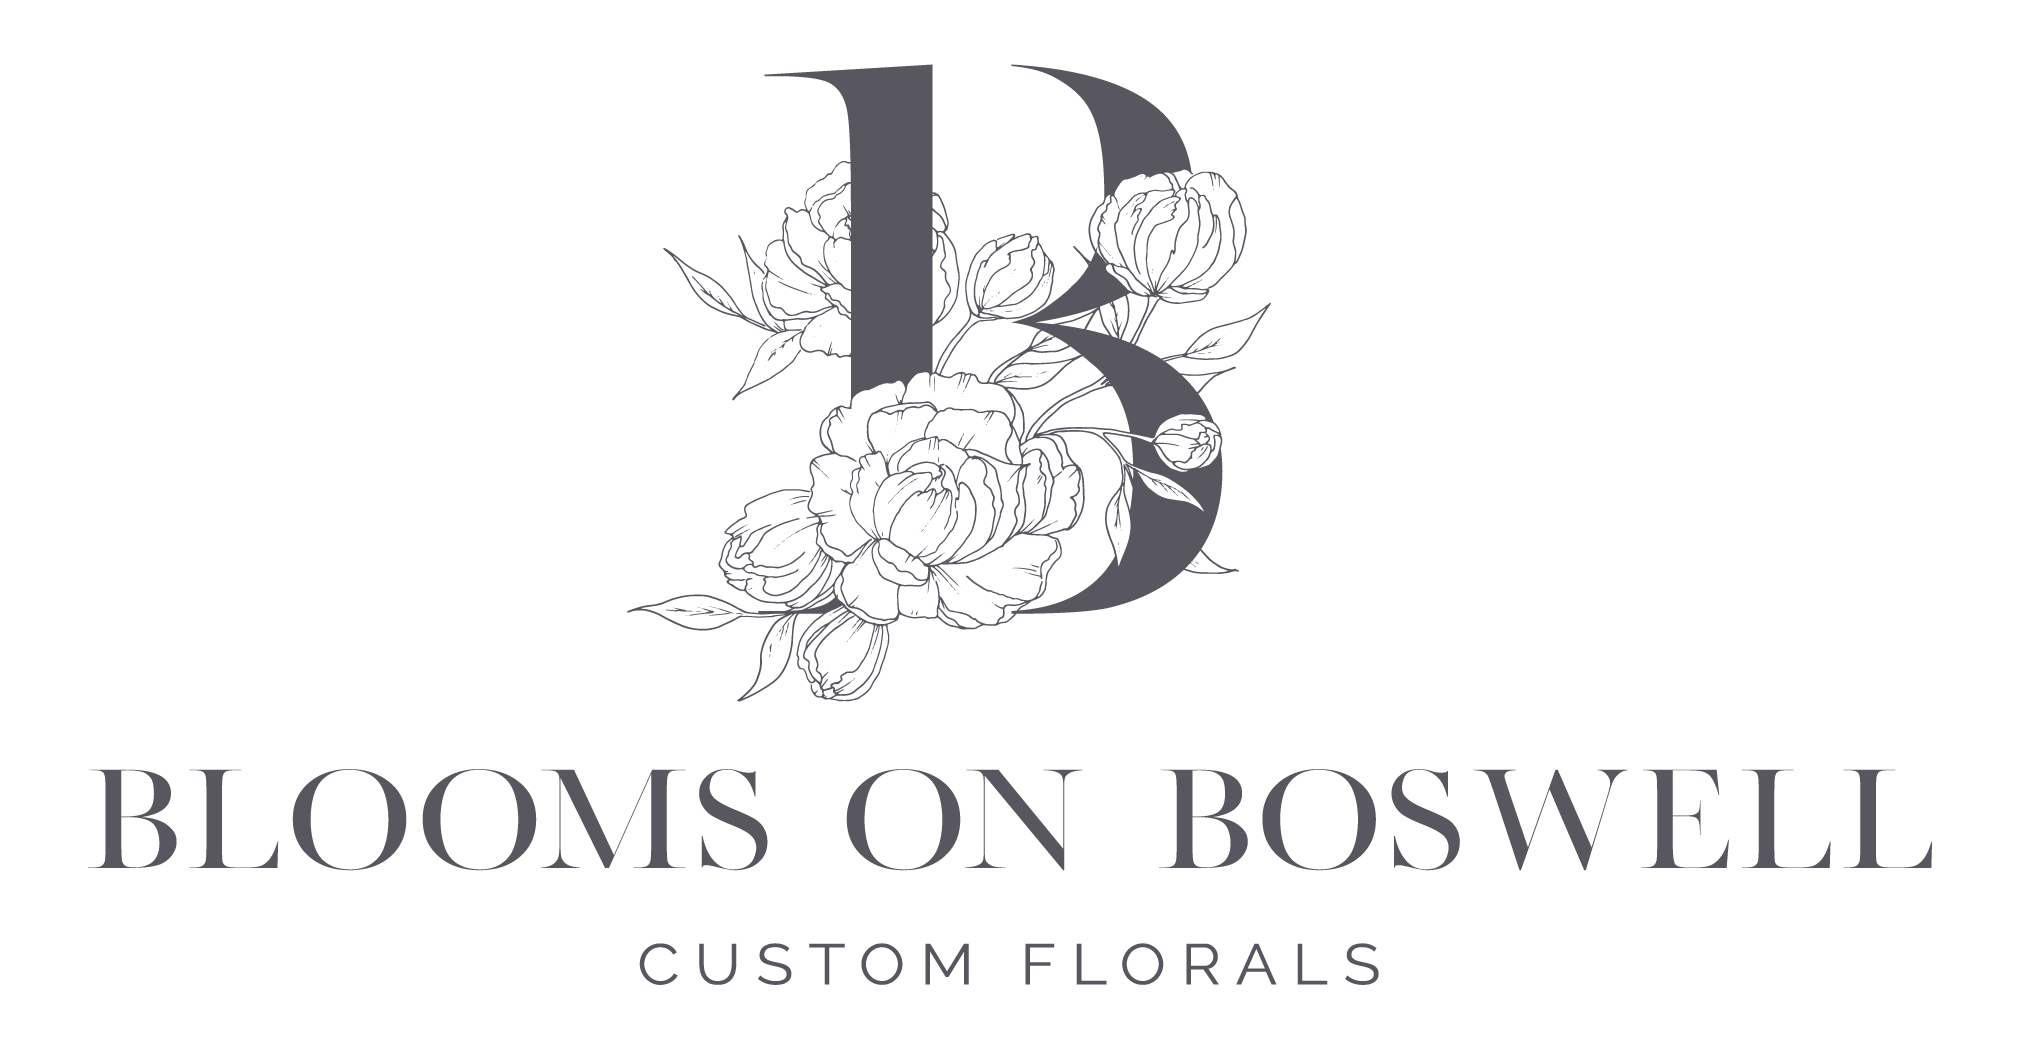 monochrome floral shop full logo